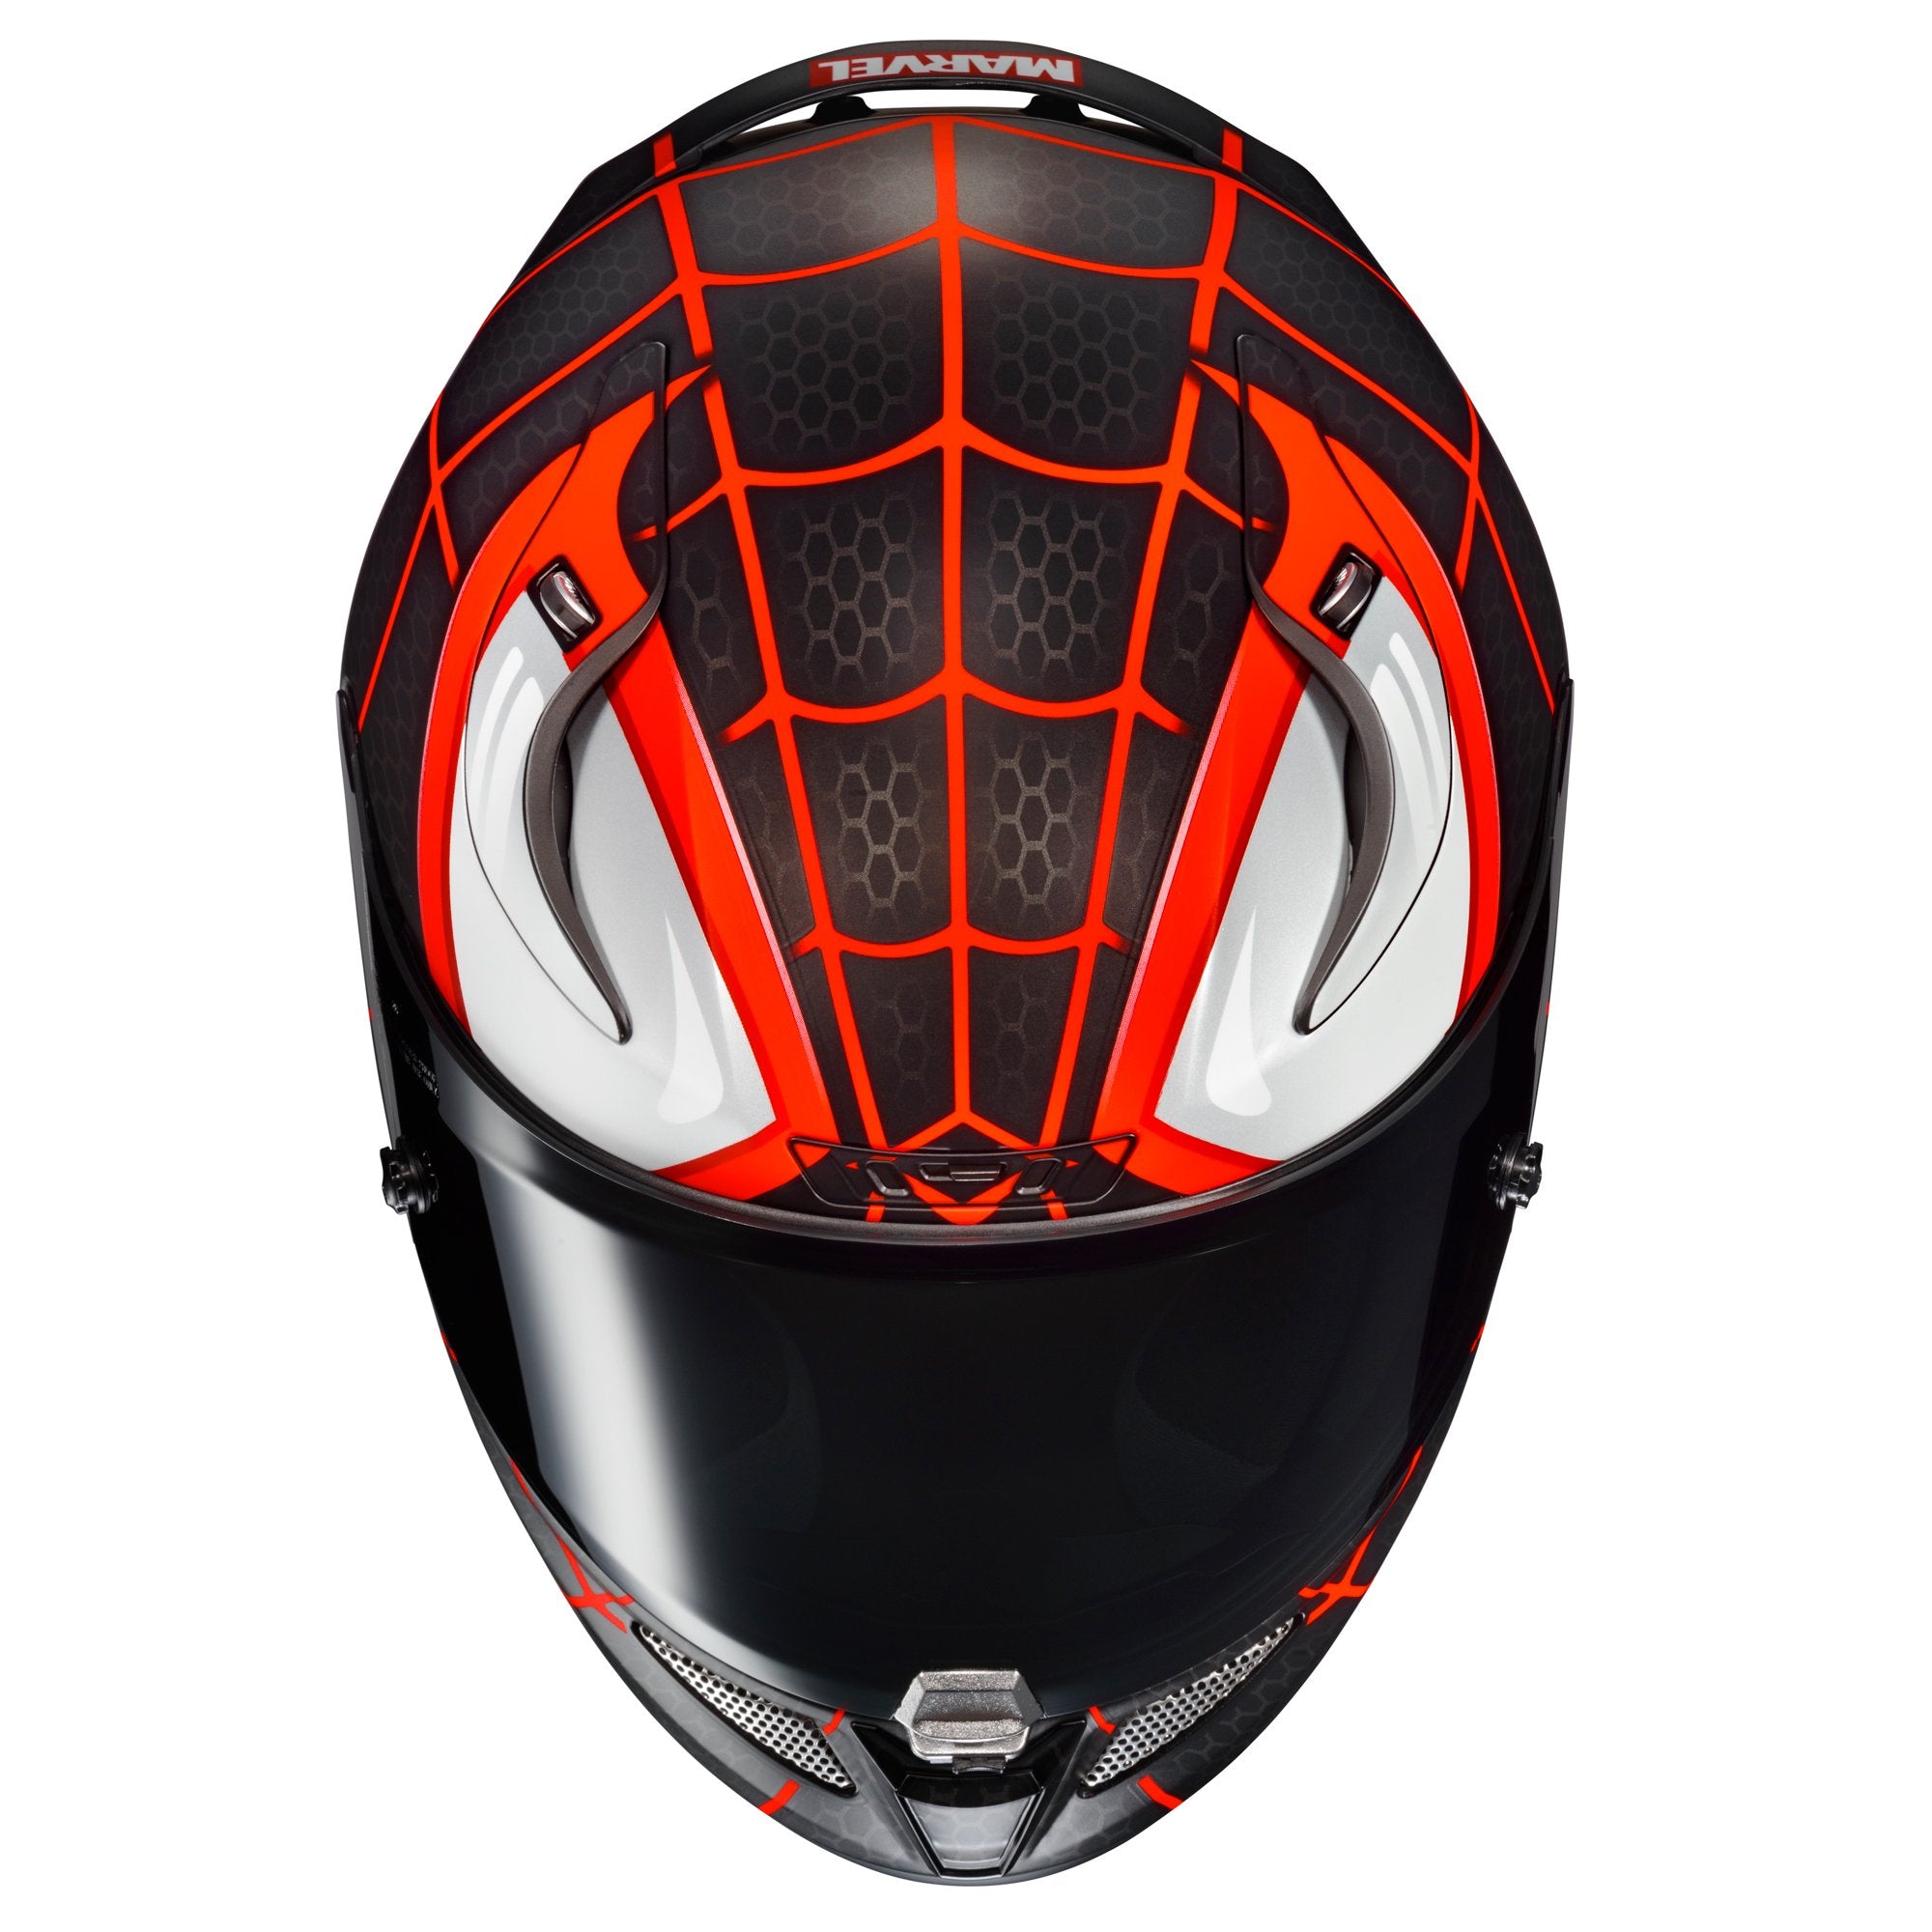 HJC RPHA 11 Full Face Motorcycle Helmet Miles Morales Marvel MC1SF 